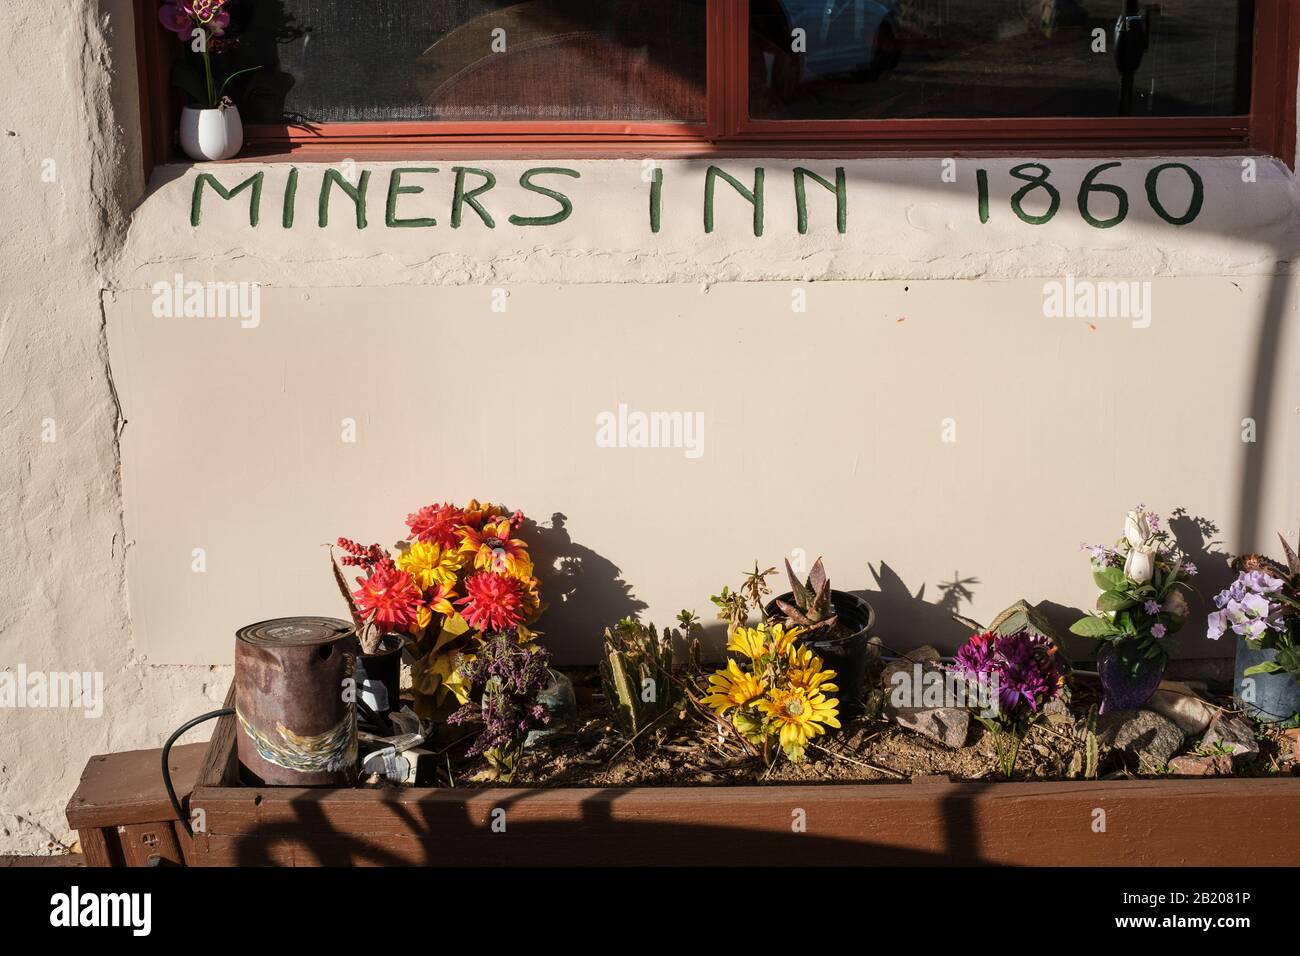 Miners Inn 1860 painted on wall at Shep's Miners Inn & Yesterdays Restaurant, Chloride, Arizona, 86431, USA. Stock Photo